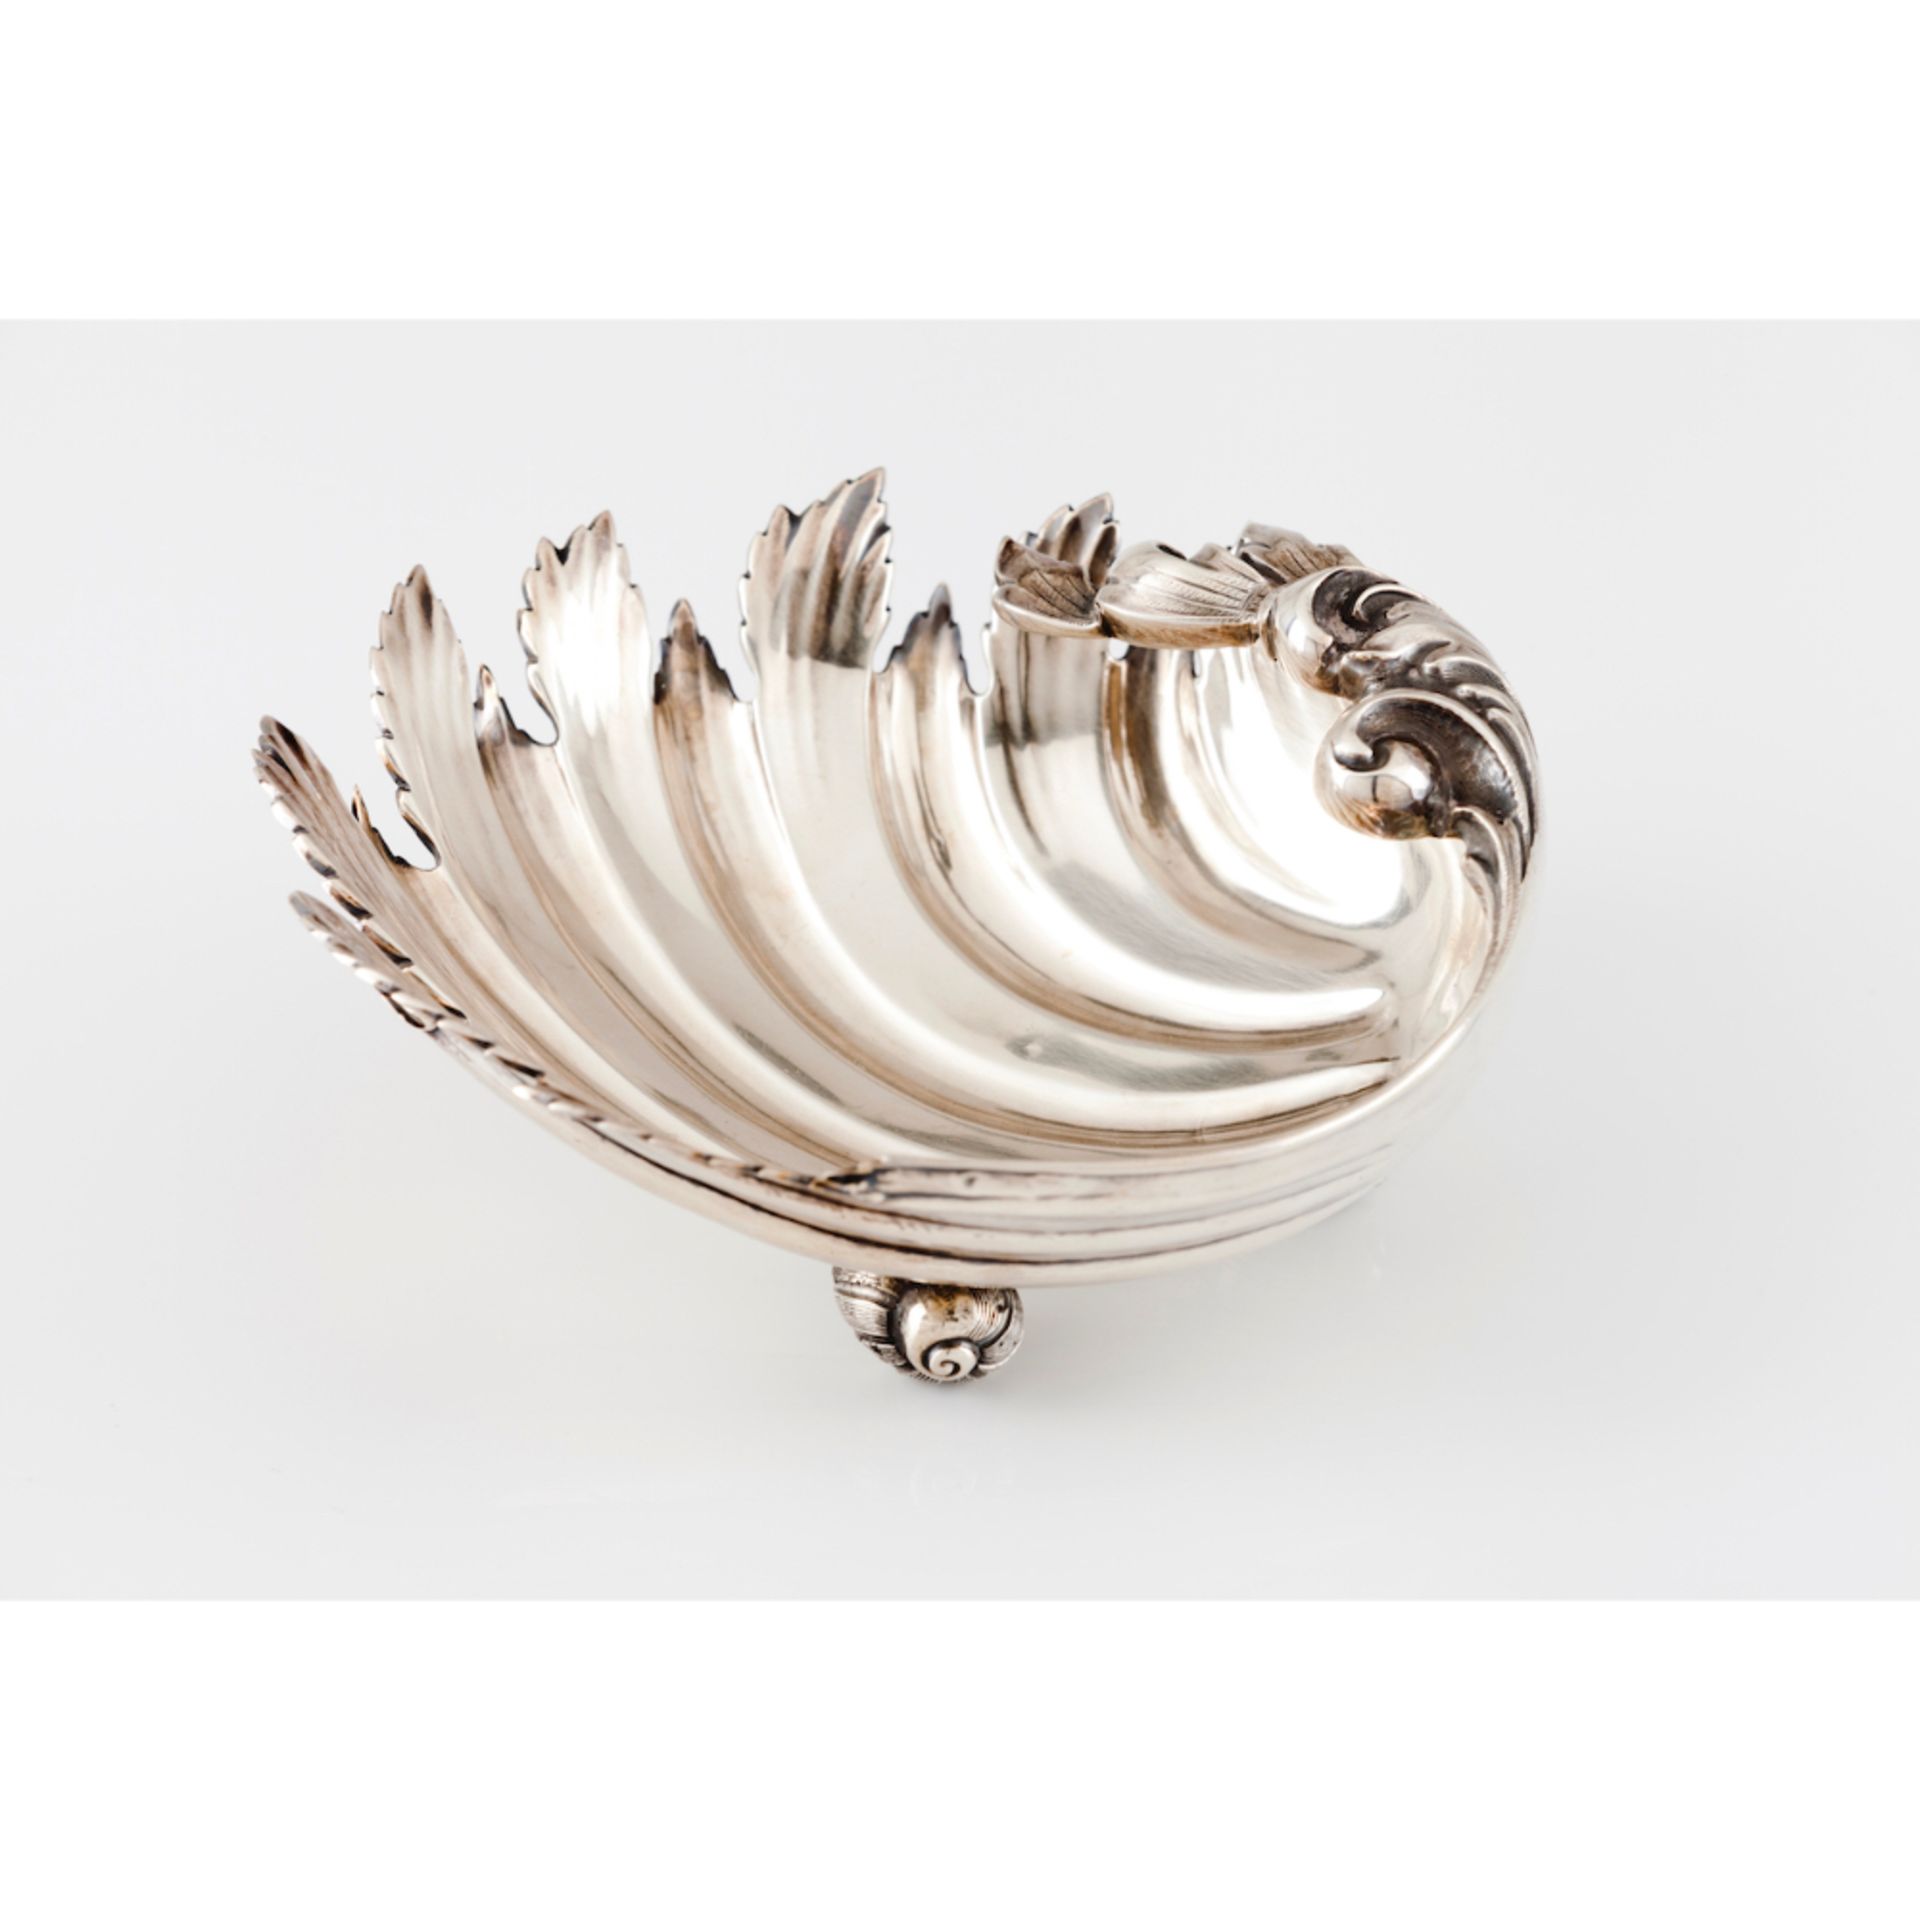 A leaf shaped bowl Portuguese silver On 3 snail shaped feet Eagle hallmark 833/1000 (1938-1985)